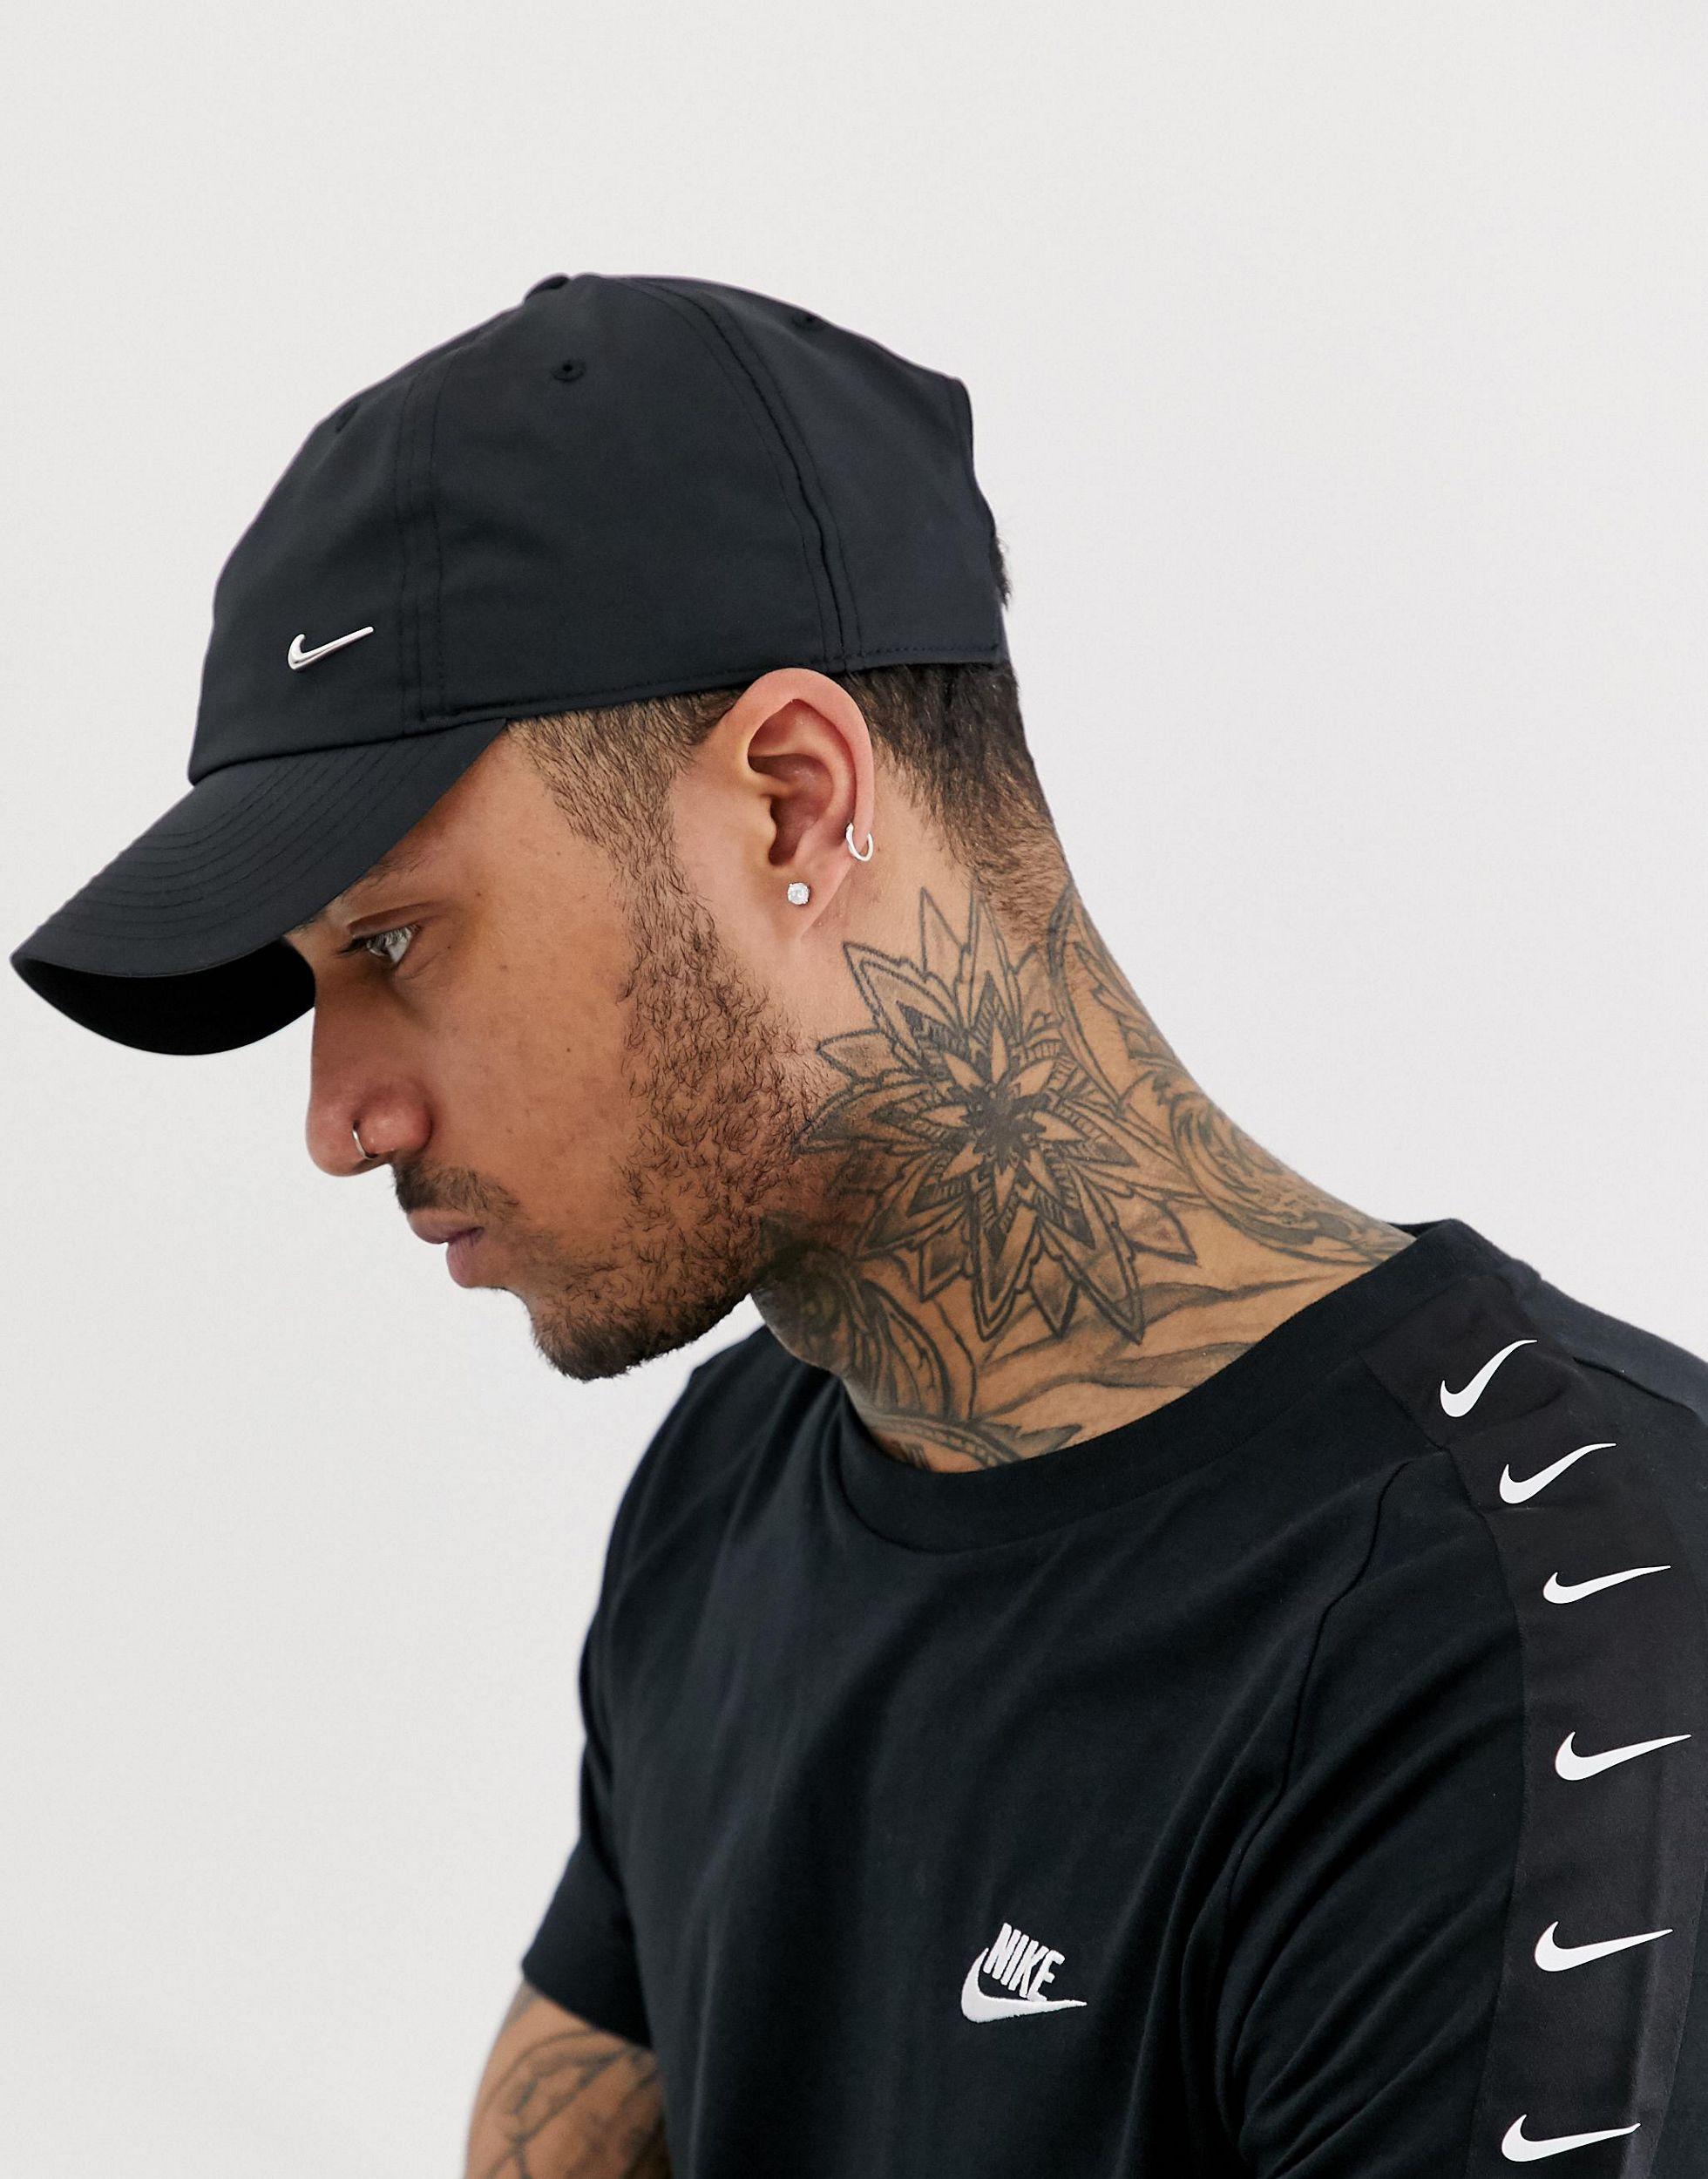 Nike Synthetic Metal Swoosh Cap in Black for Men - Save 52% - Lyst